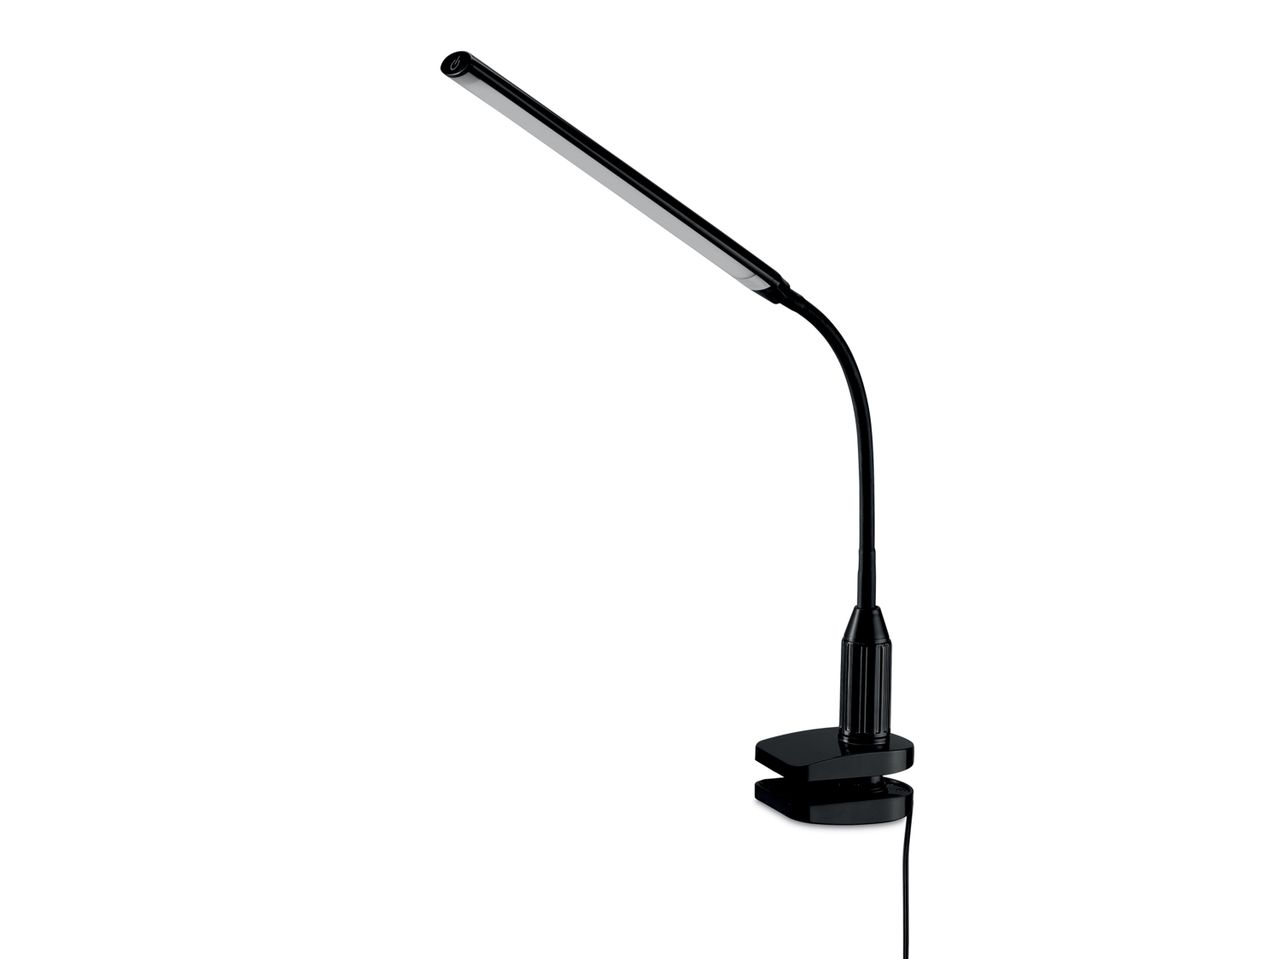 Lampada LED da tavolo o con morsetto , prezzo 14,99 EUR 
Lampada LED da tavolo o ...